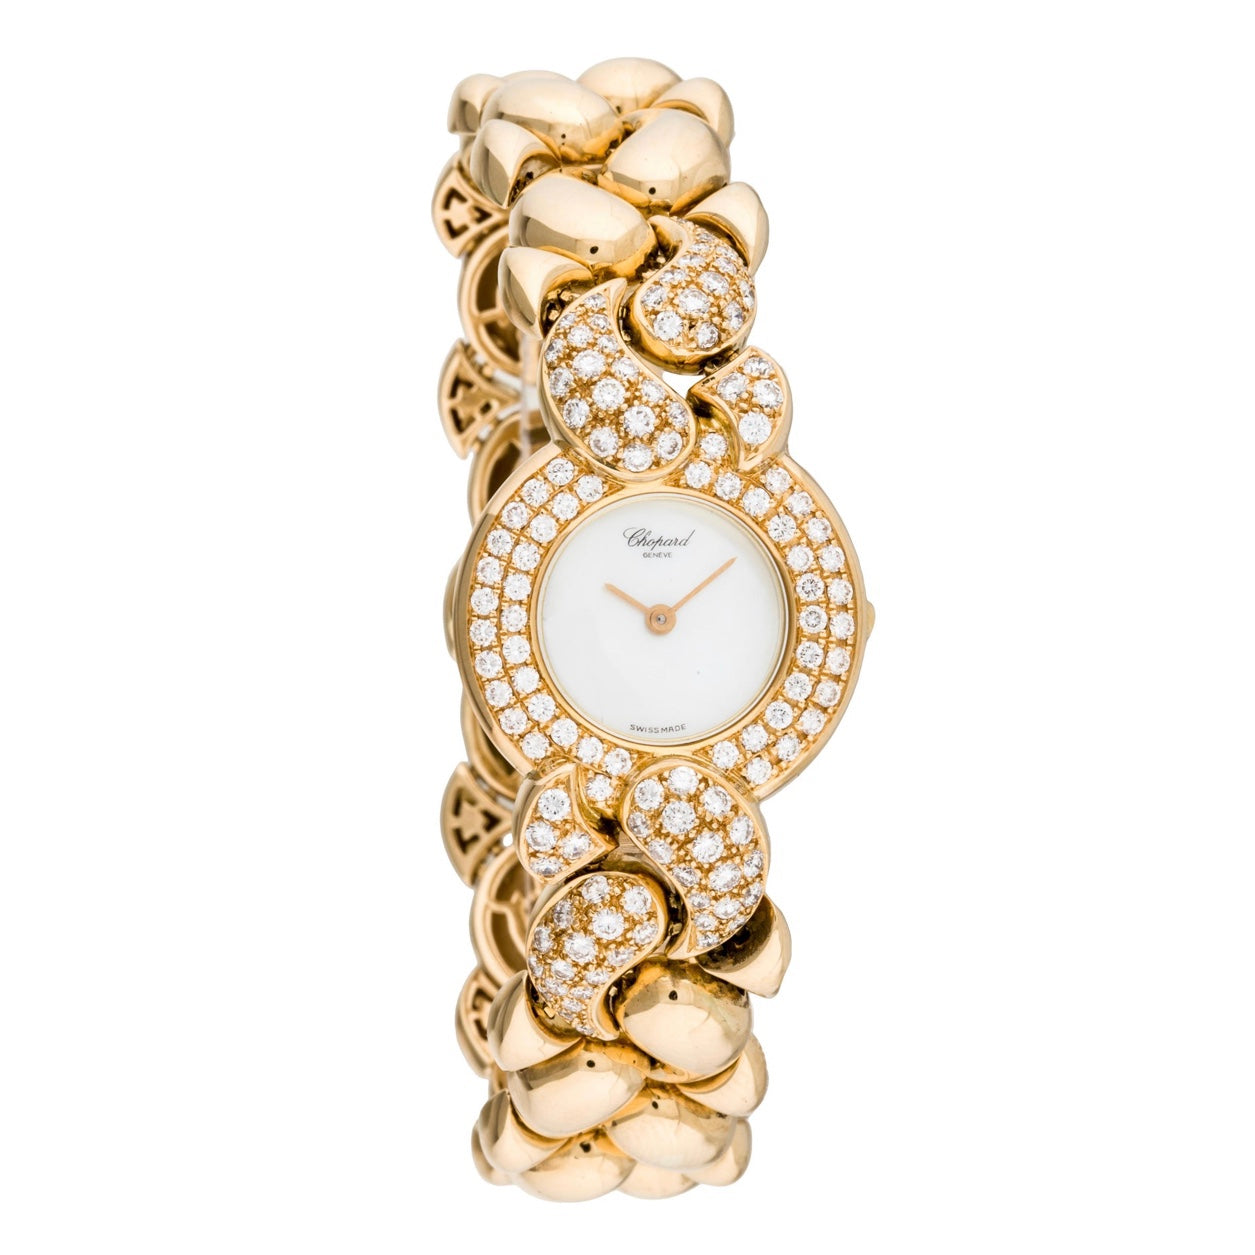 CHOPARD Cašmir 18K Yellow Gold Ladies Bracelet Watch ~2TCW Diamonds MOP Dial